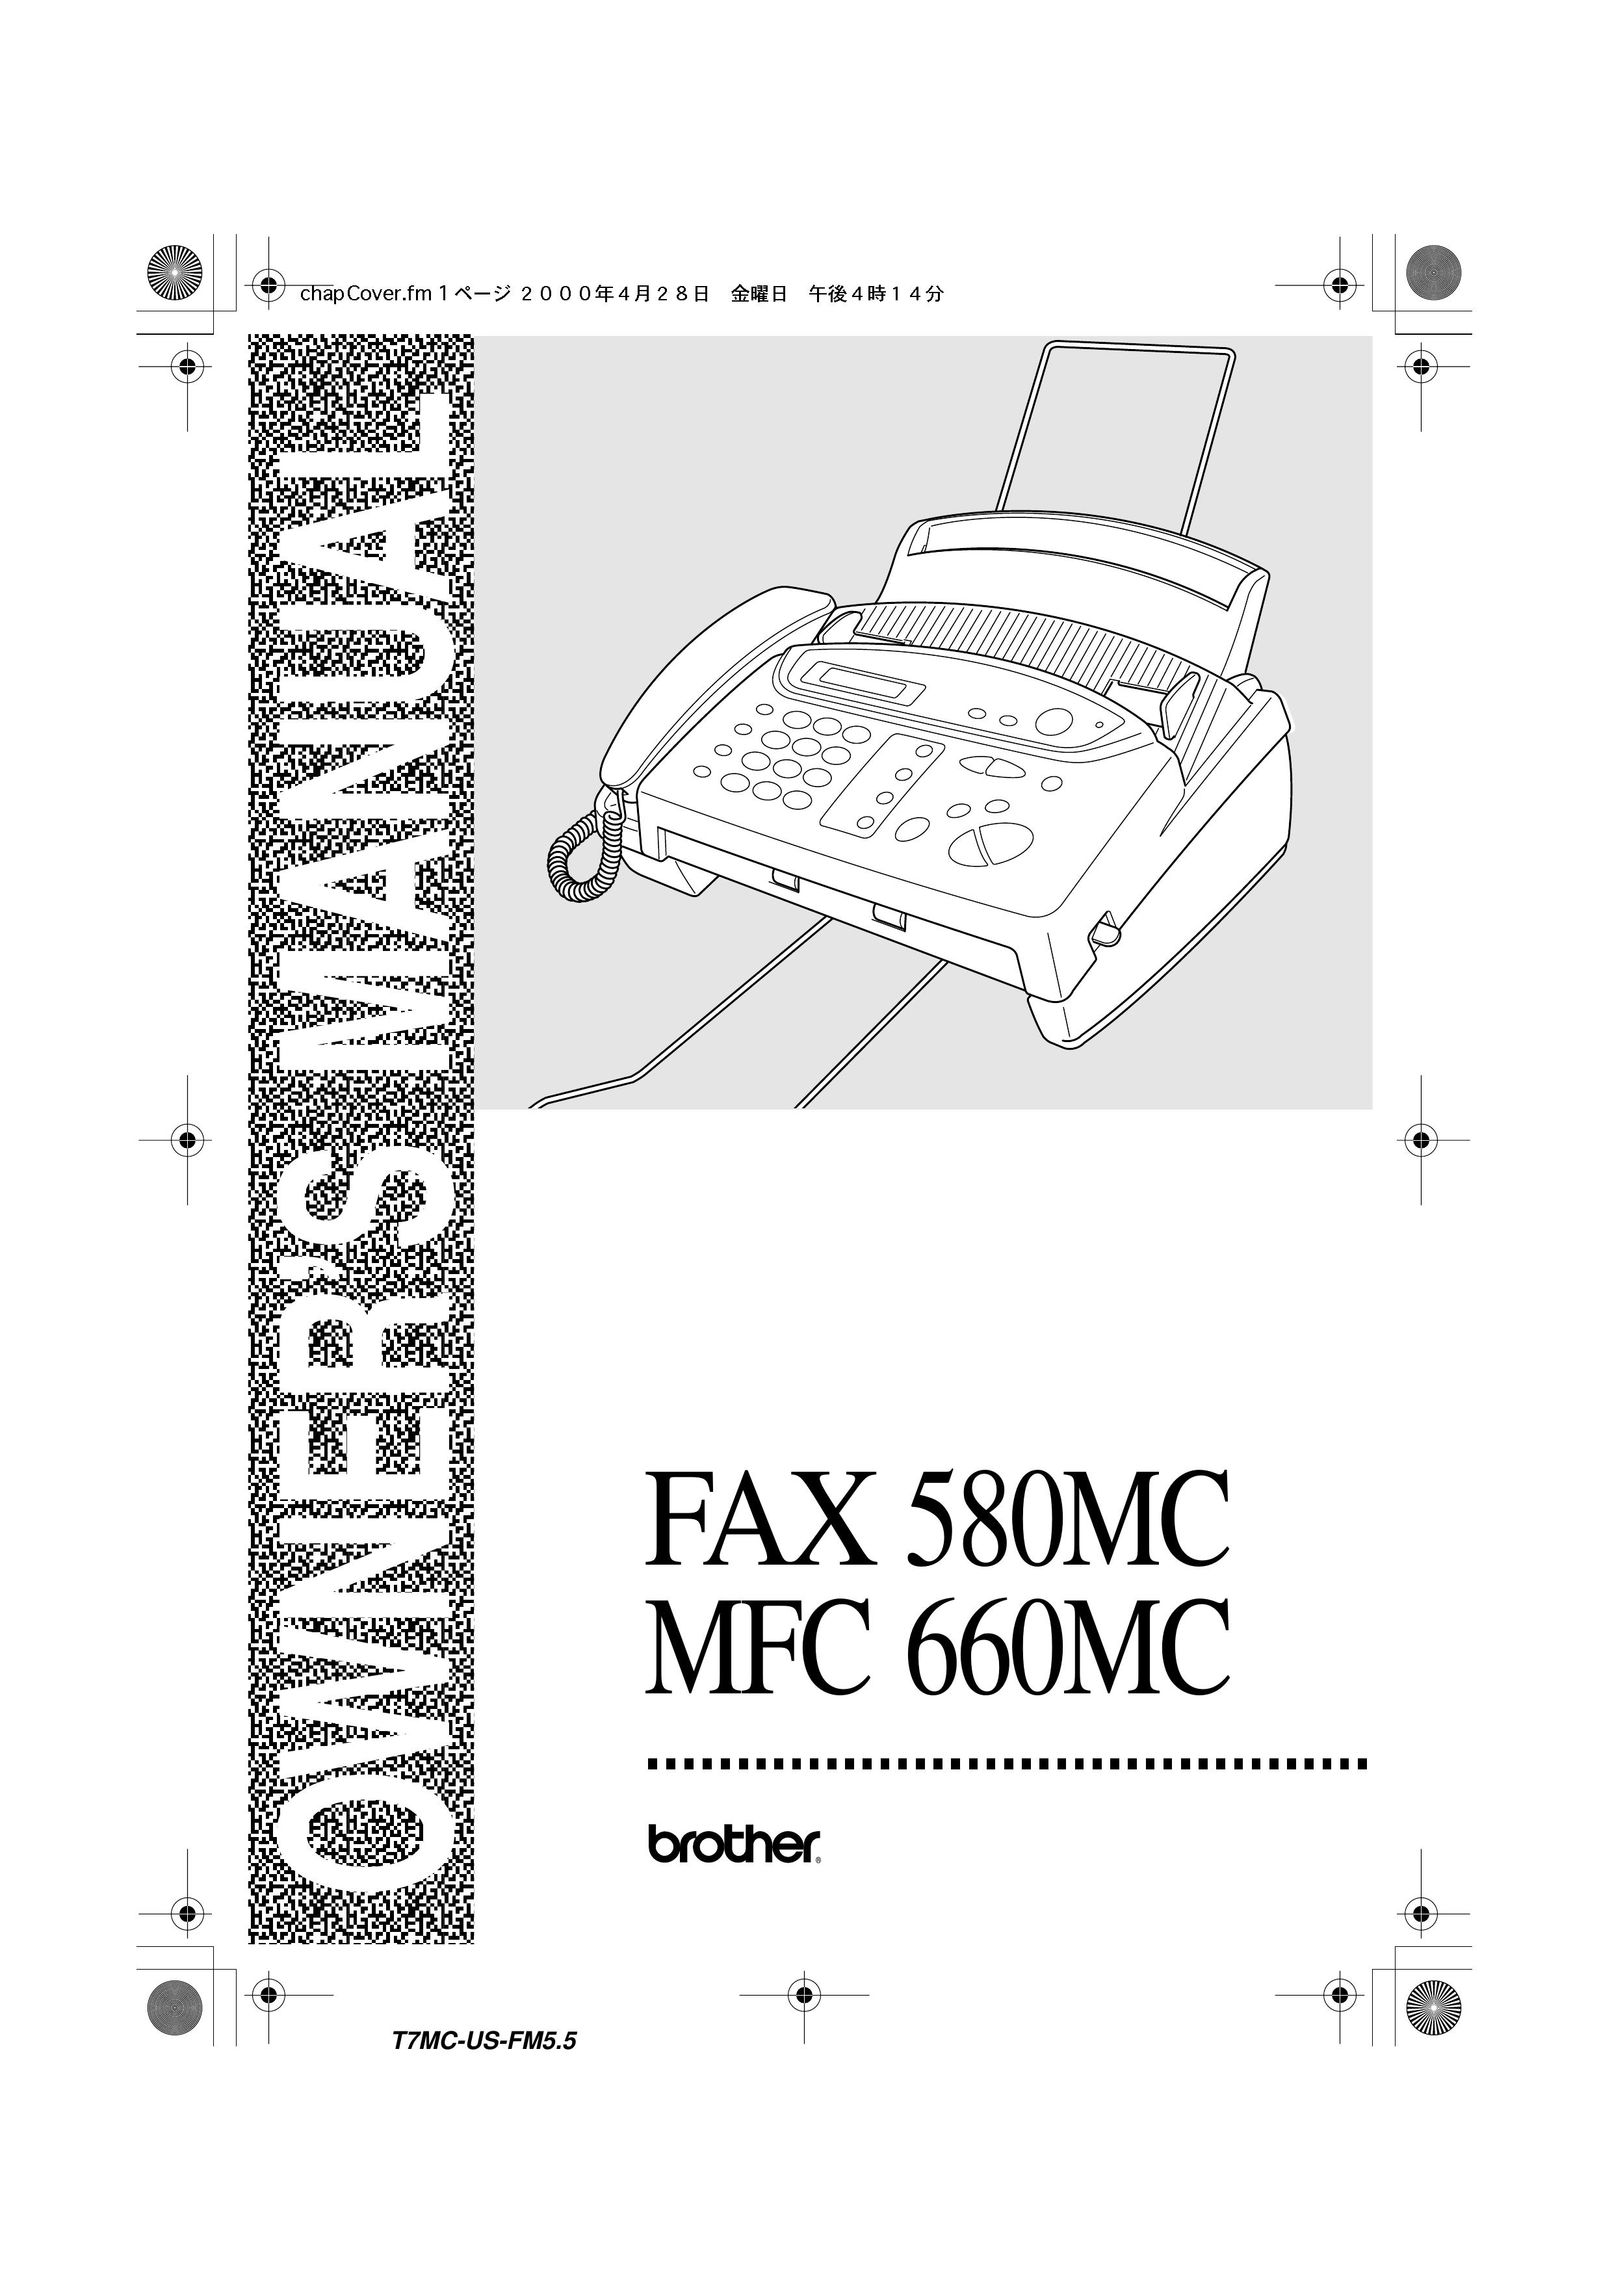 Brother 580MC Fax Machine User Manual